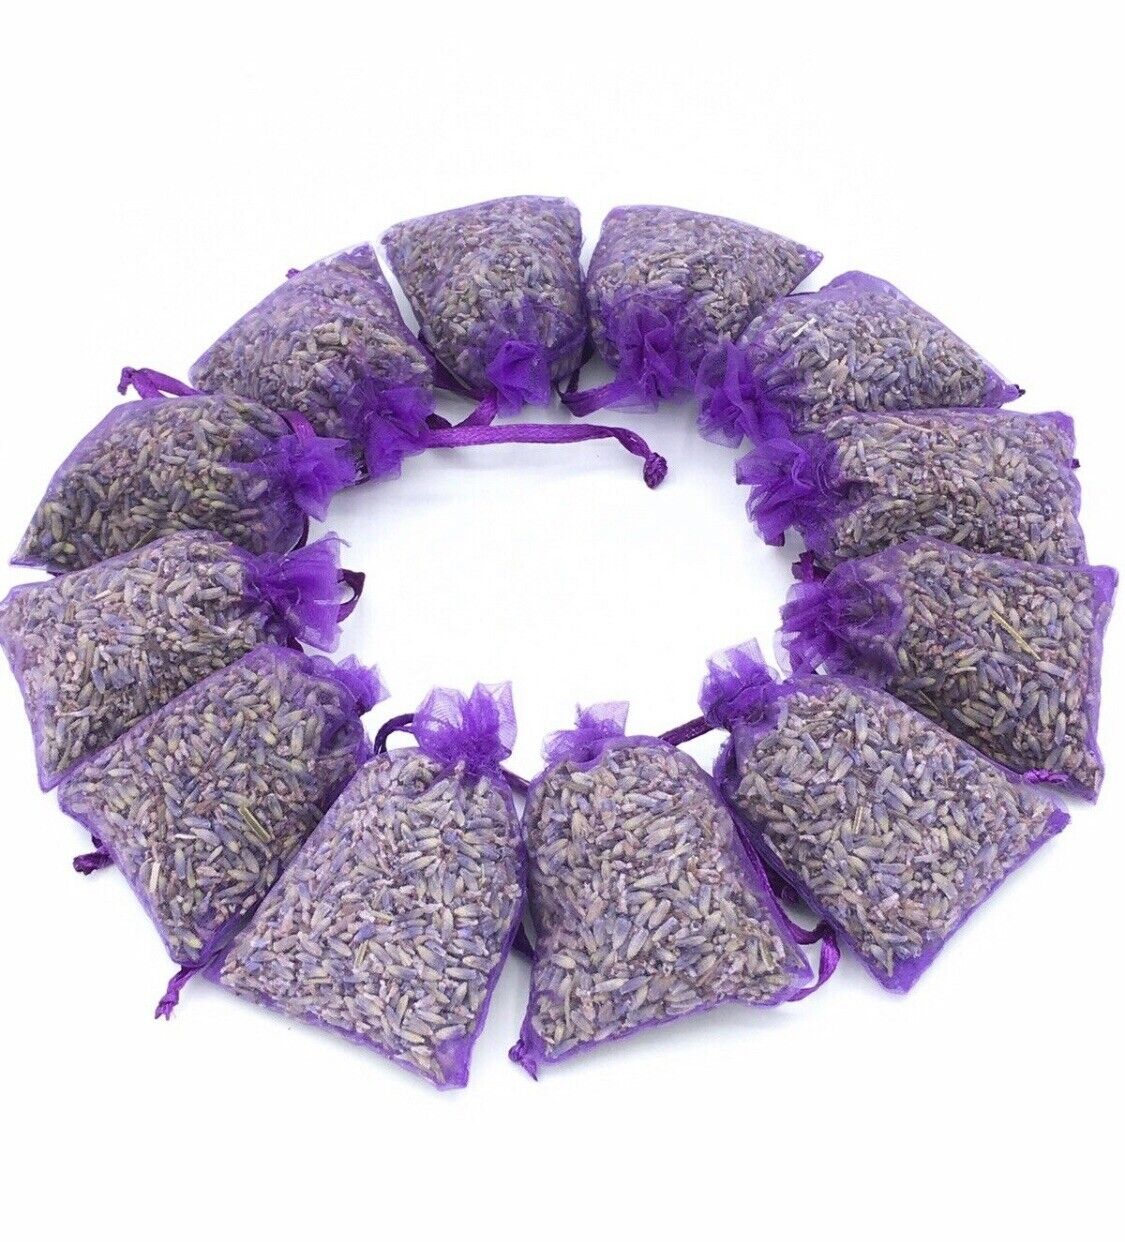 12 Pack Purple Lavender Bud Sachets For Potpourri Home Decor 2x3 Inches Lilly's Lavender LLV Prp12 - фотография #2